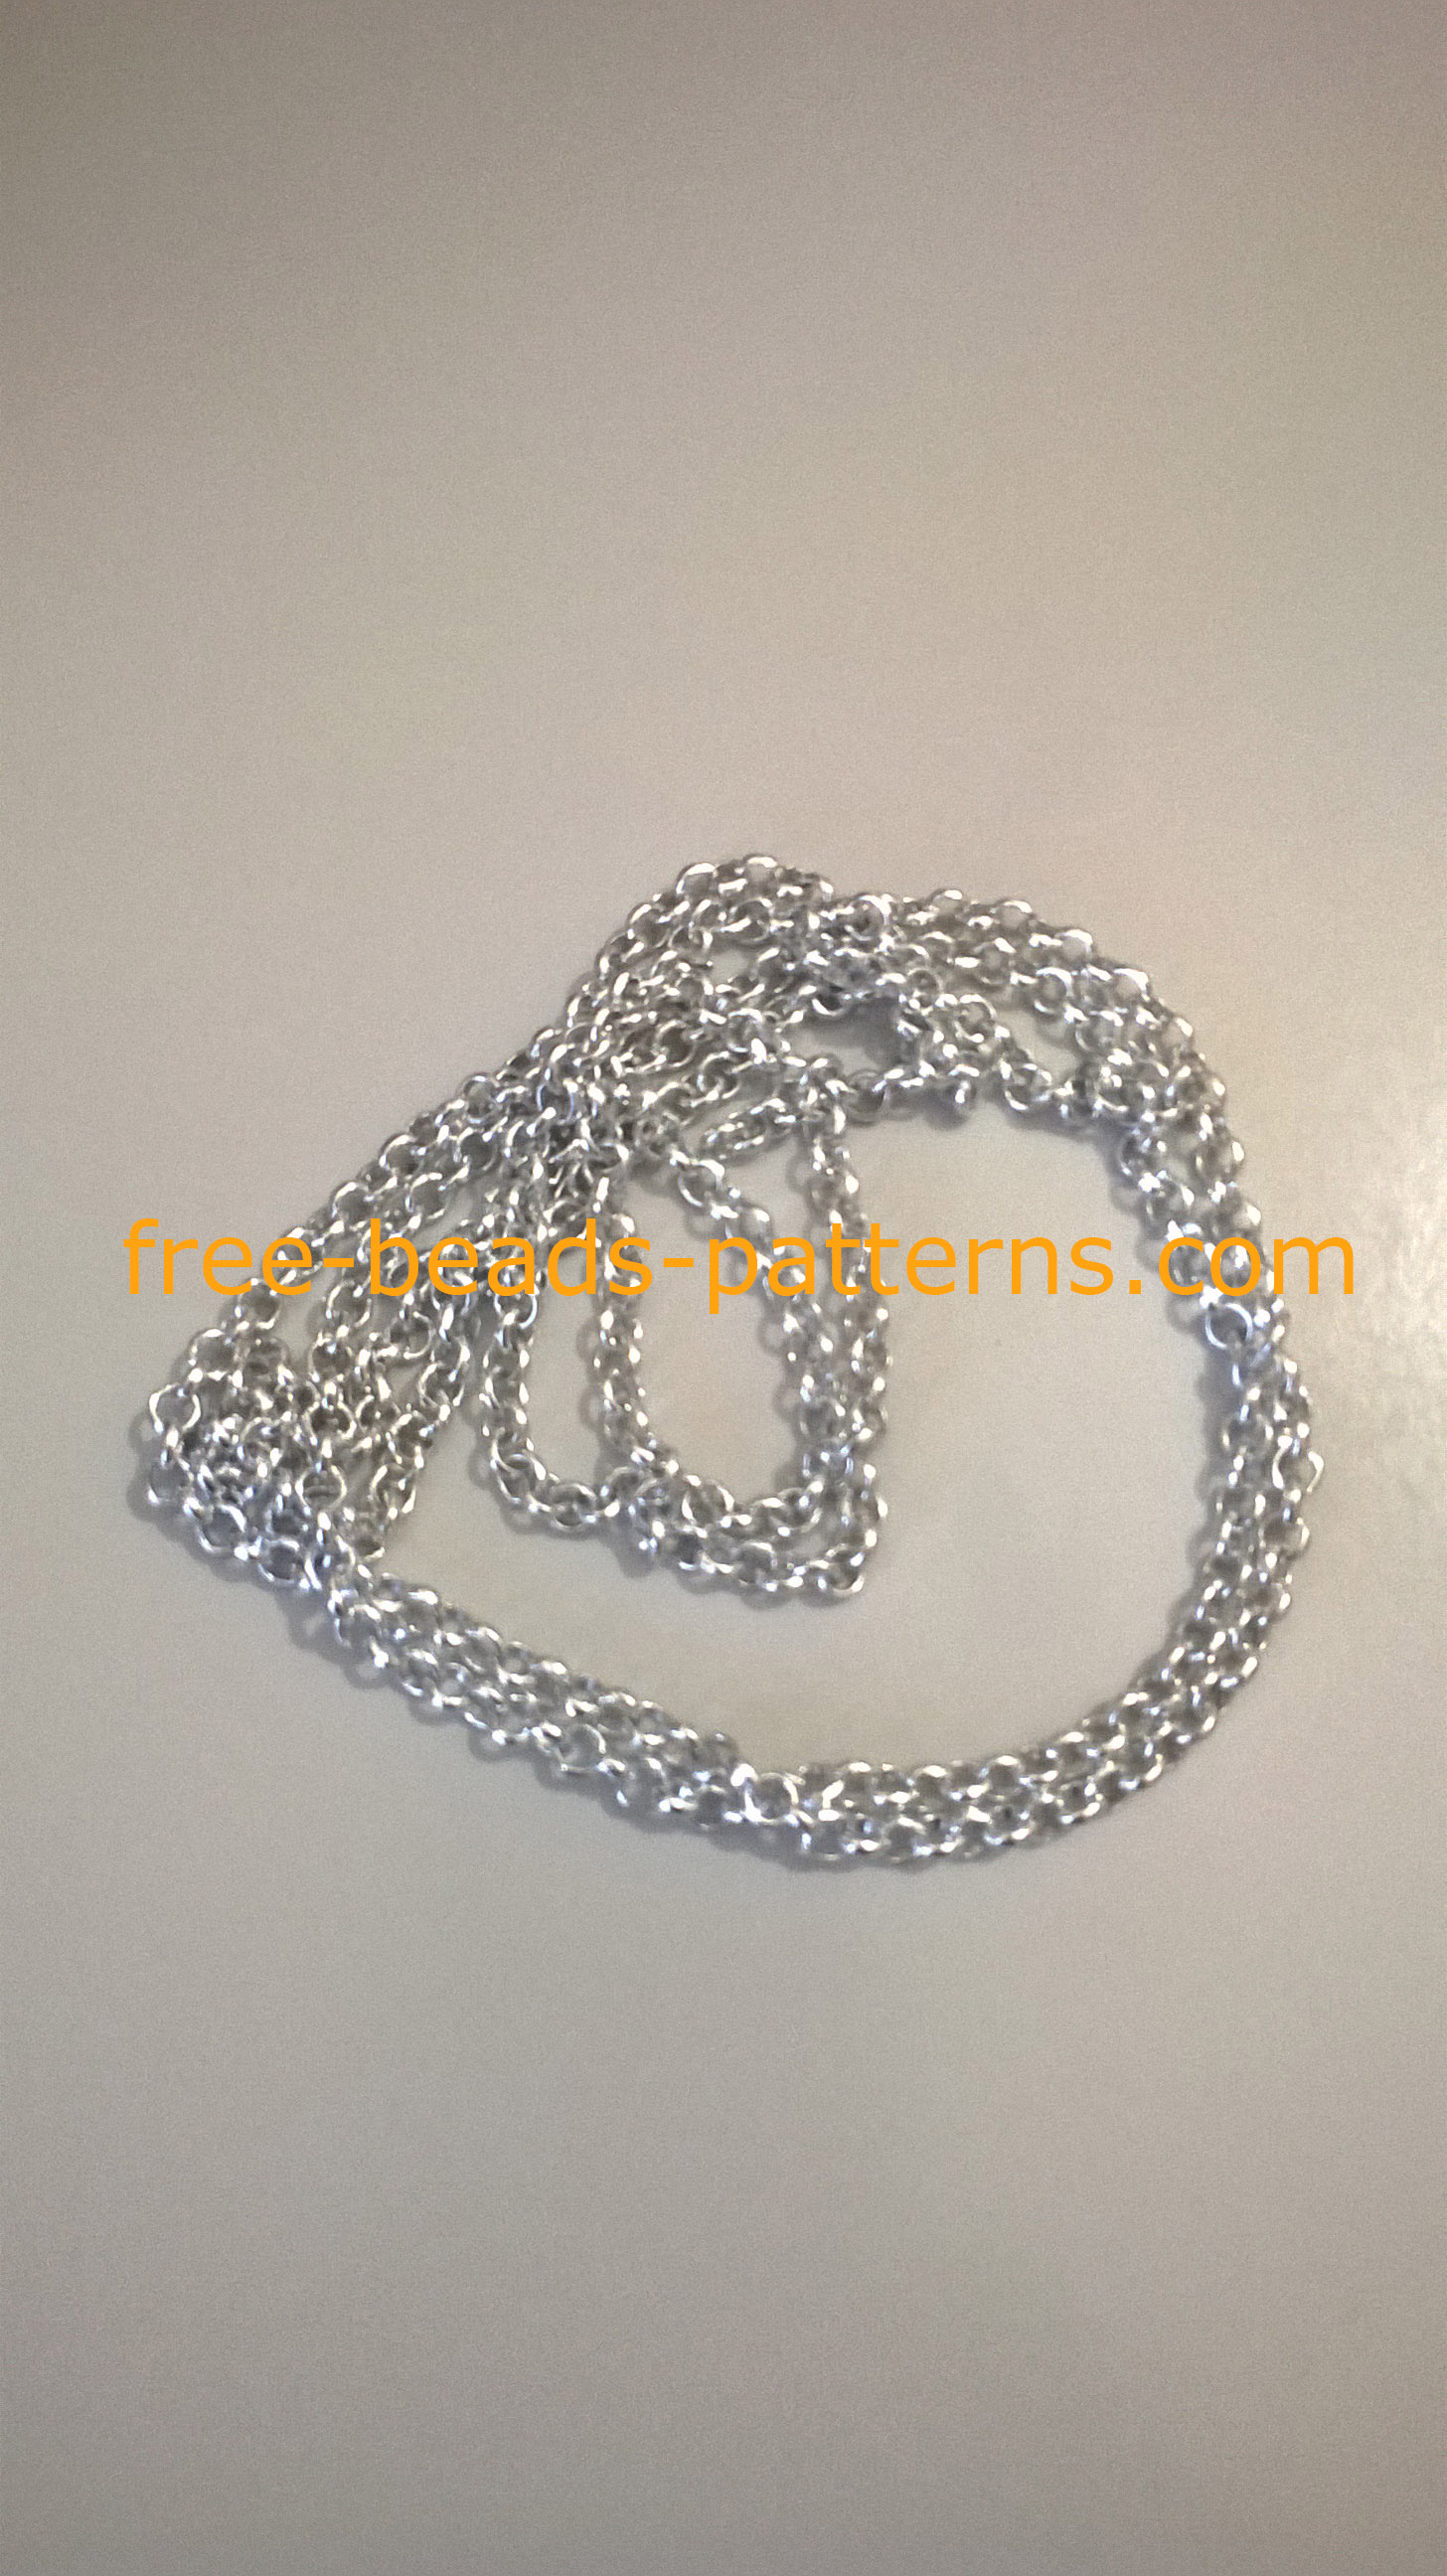 Custome jewelry chain perler beads fuse beads handmade crafts supplies photos